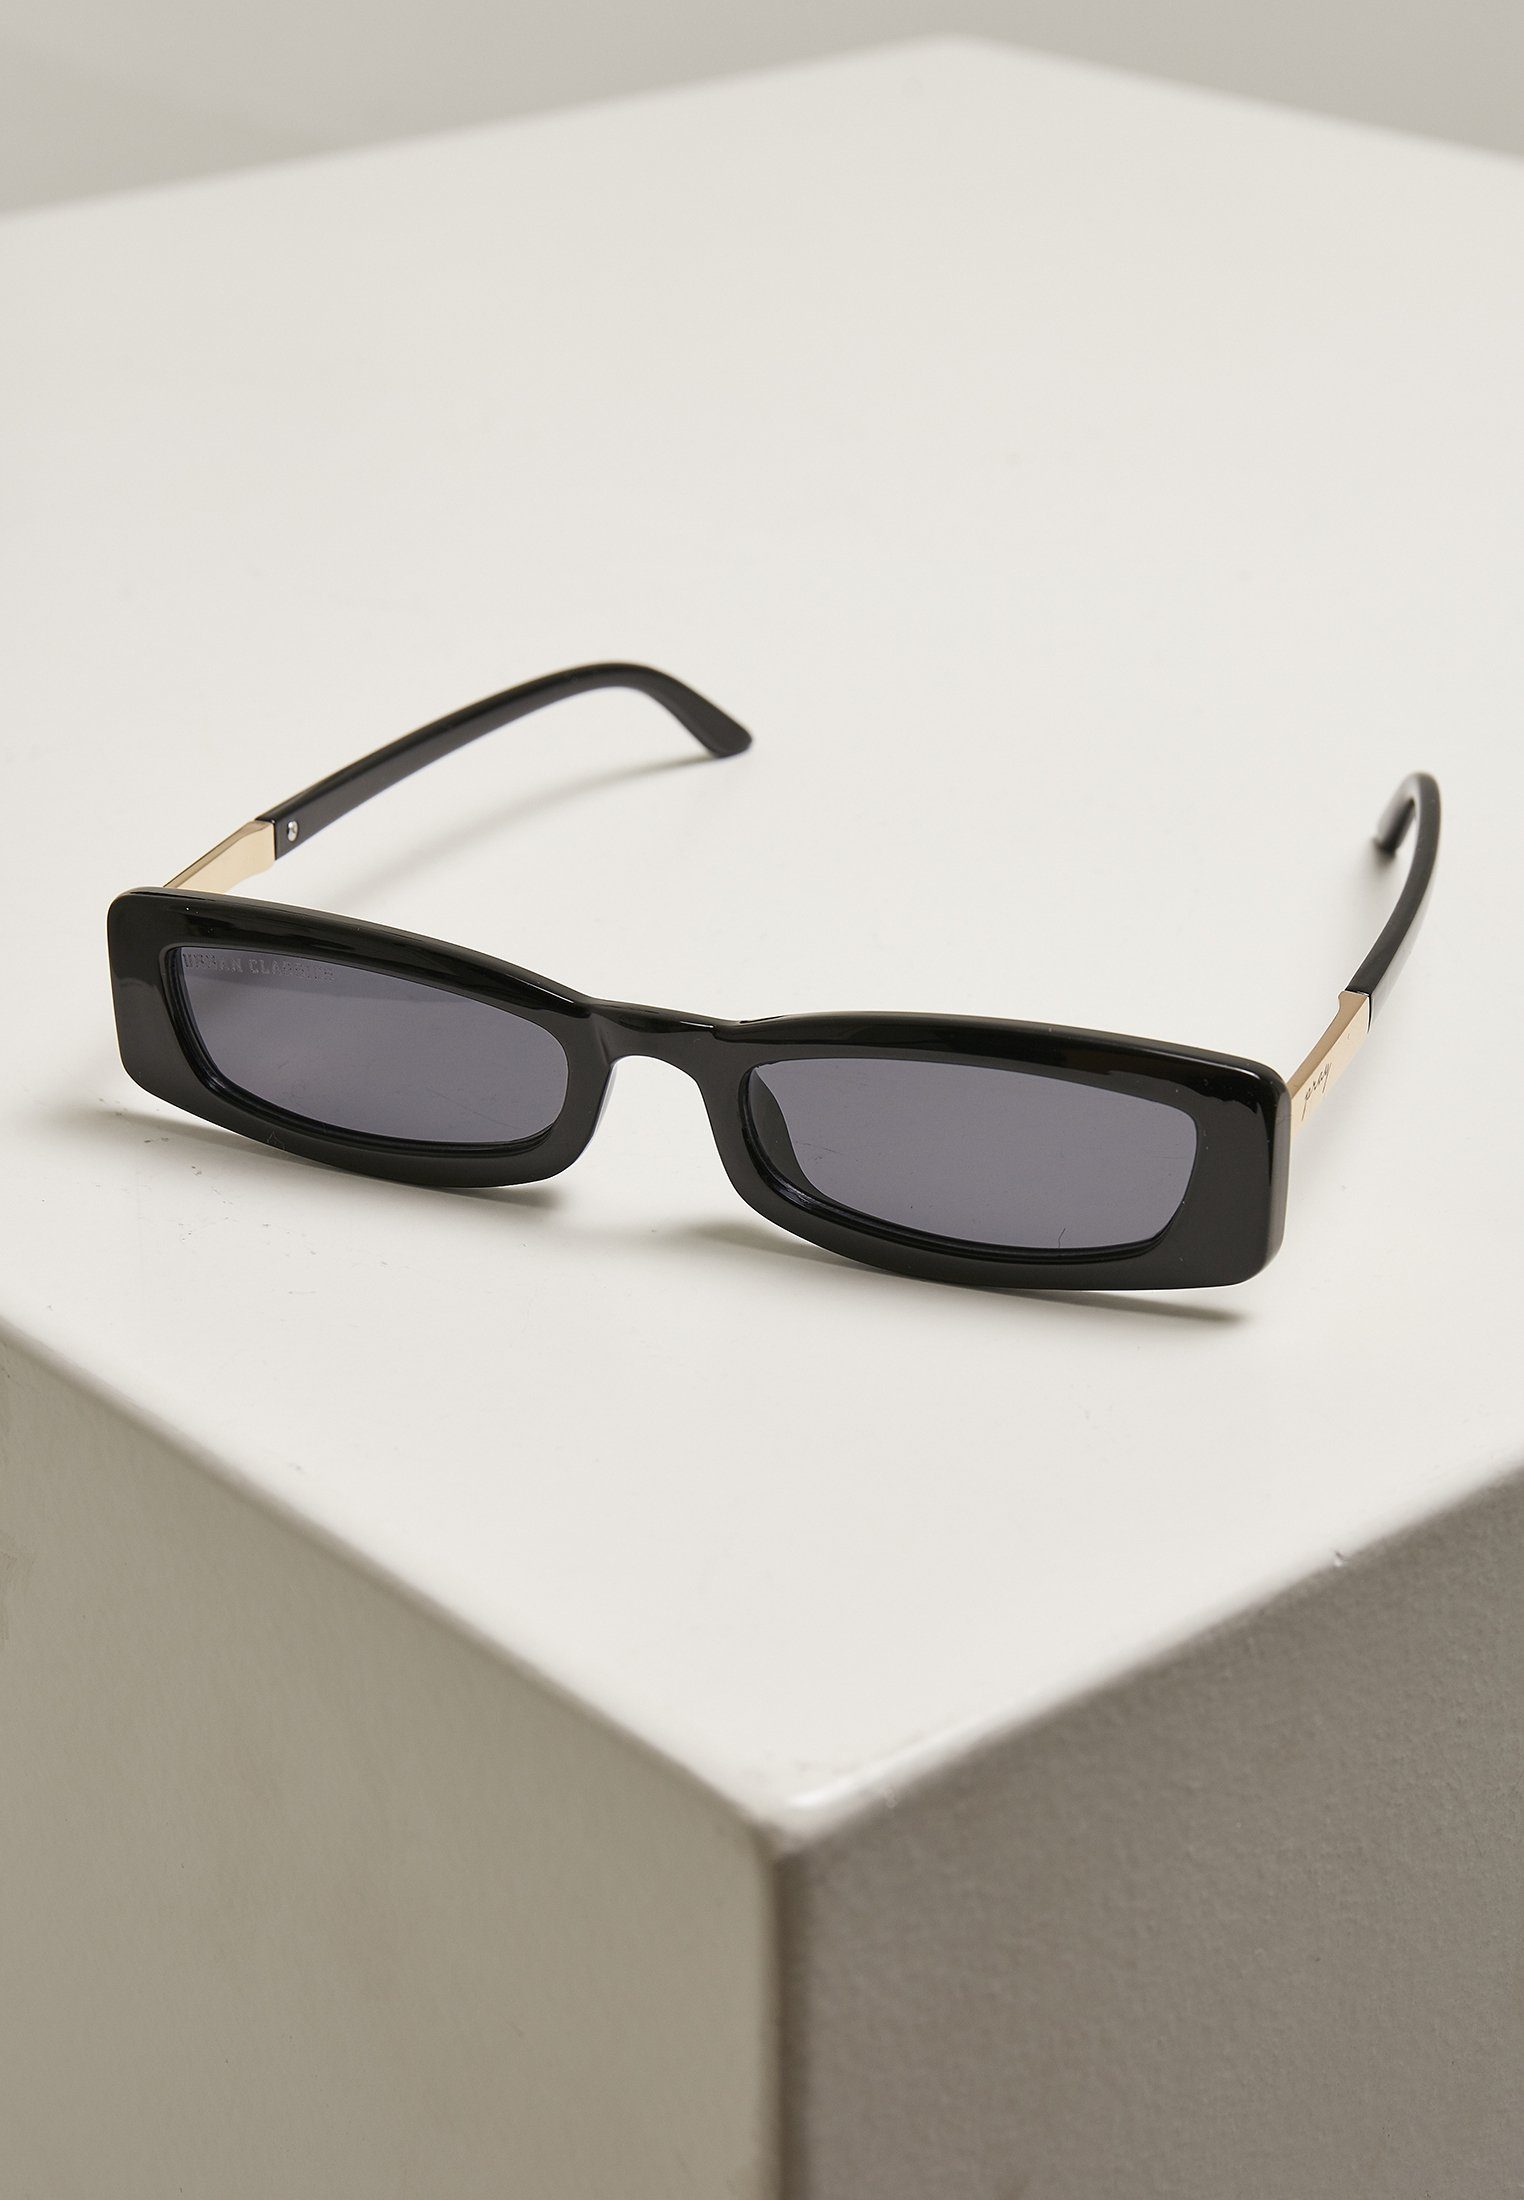 Sunglasses Sonnenbrille Minicoy URBAN Unisex CLASSICS